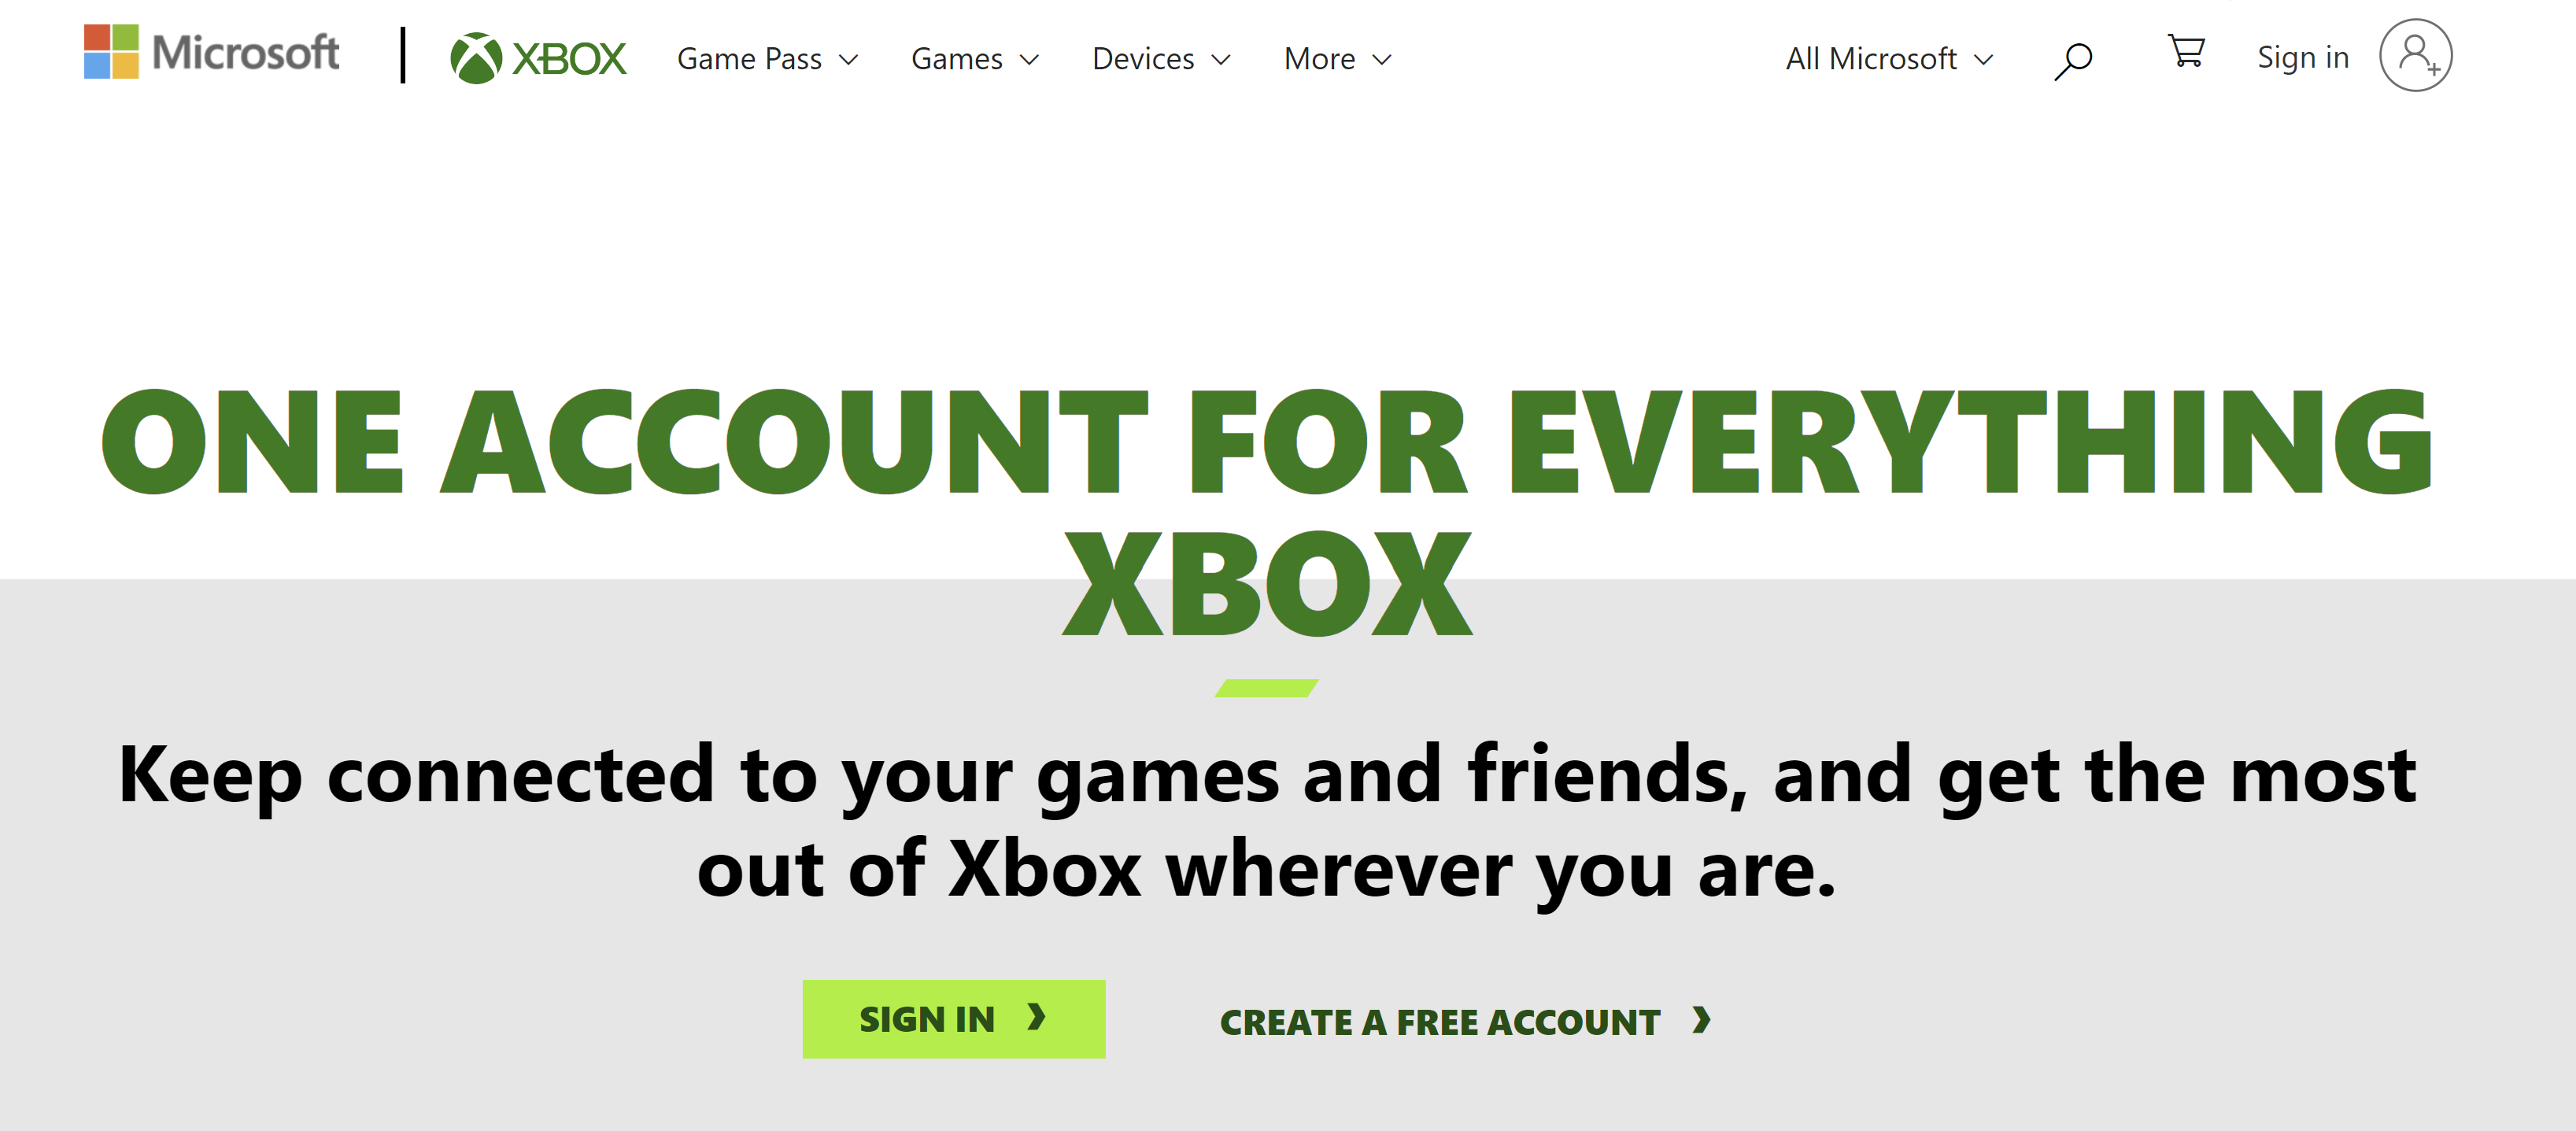 Microsoft Xbox Sign in - www.microsoft.com/link code